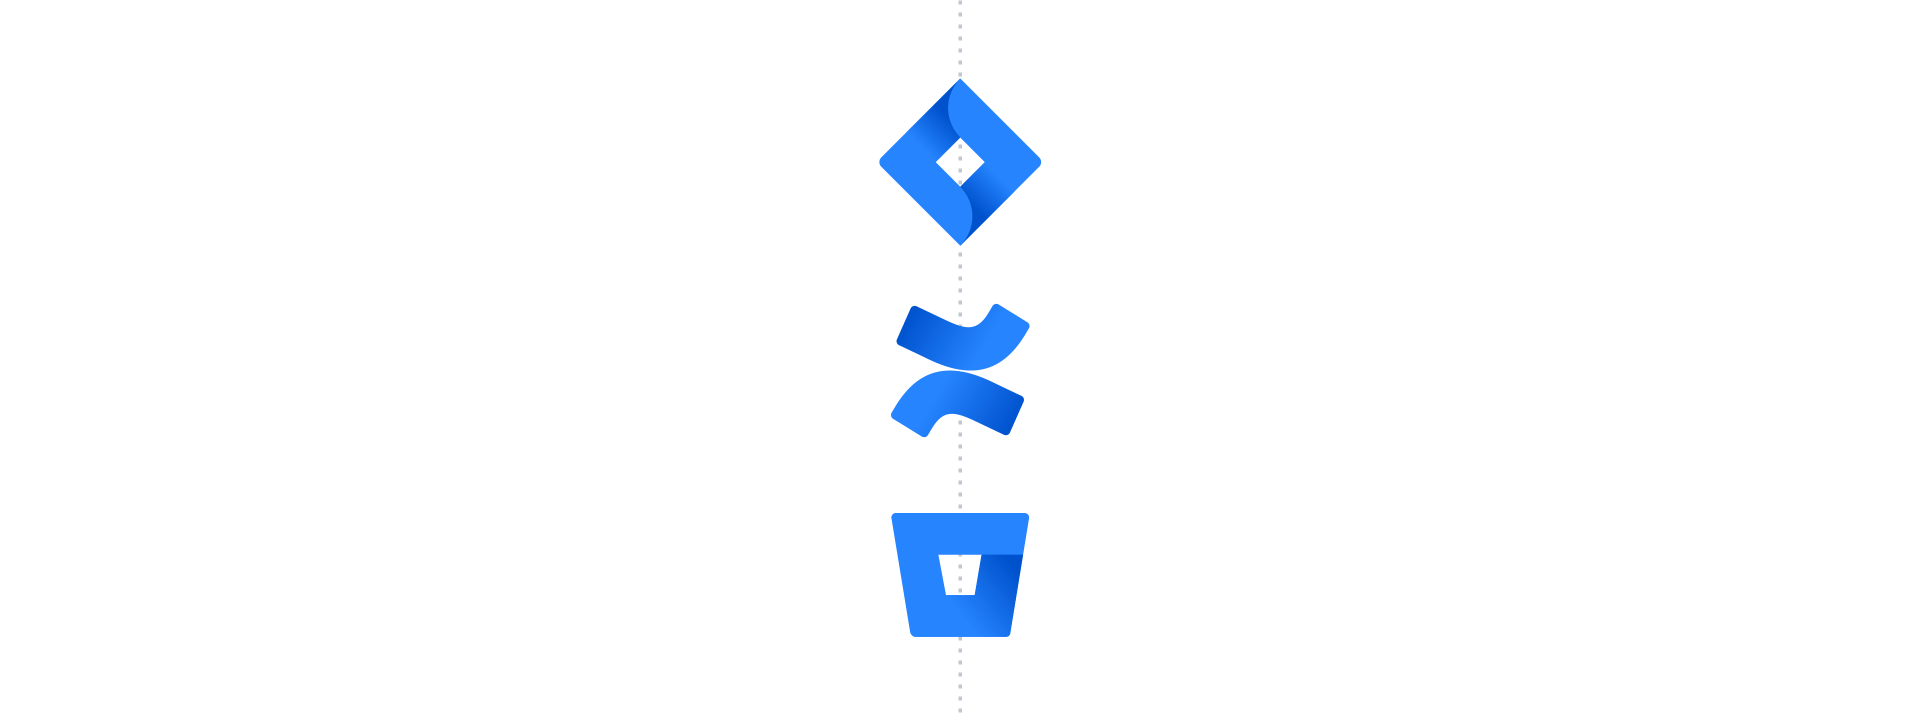 Vertical alignment of Atlassian logomarks including Jira, Confluence and Bitbucket.